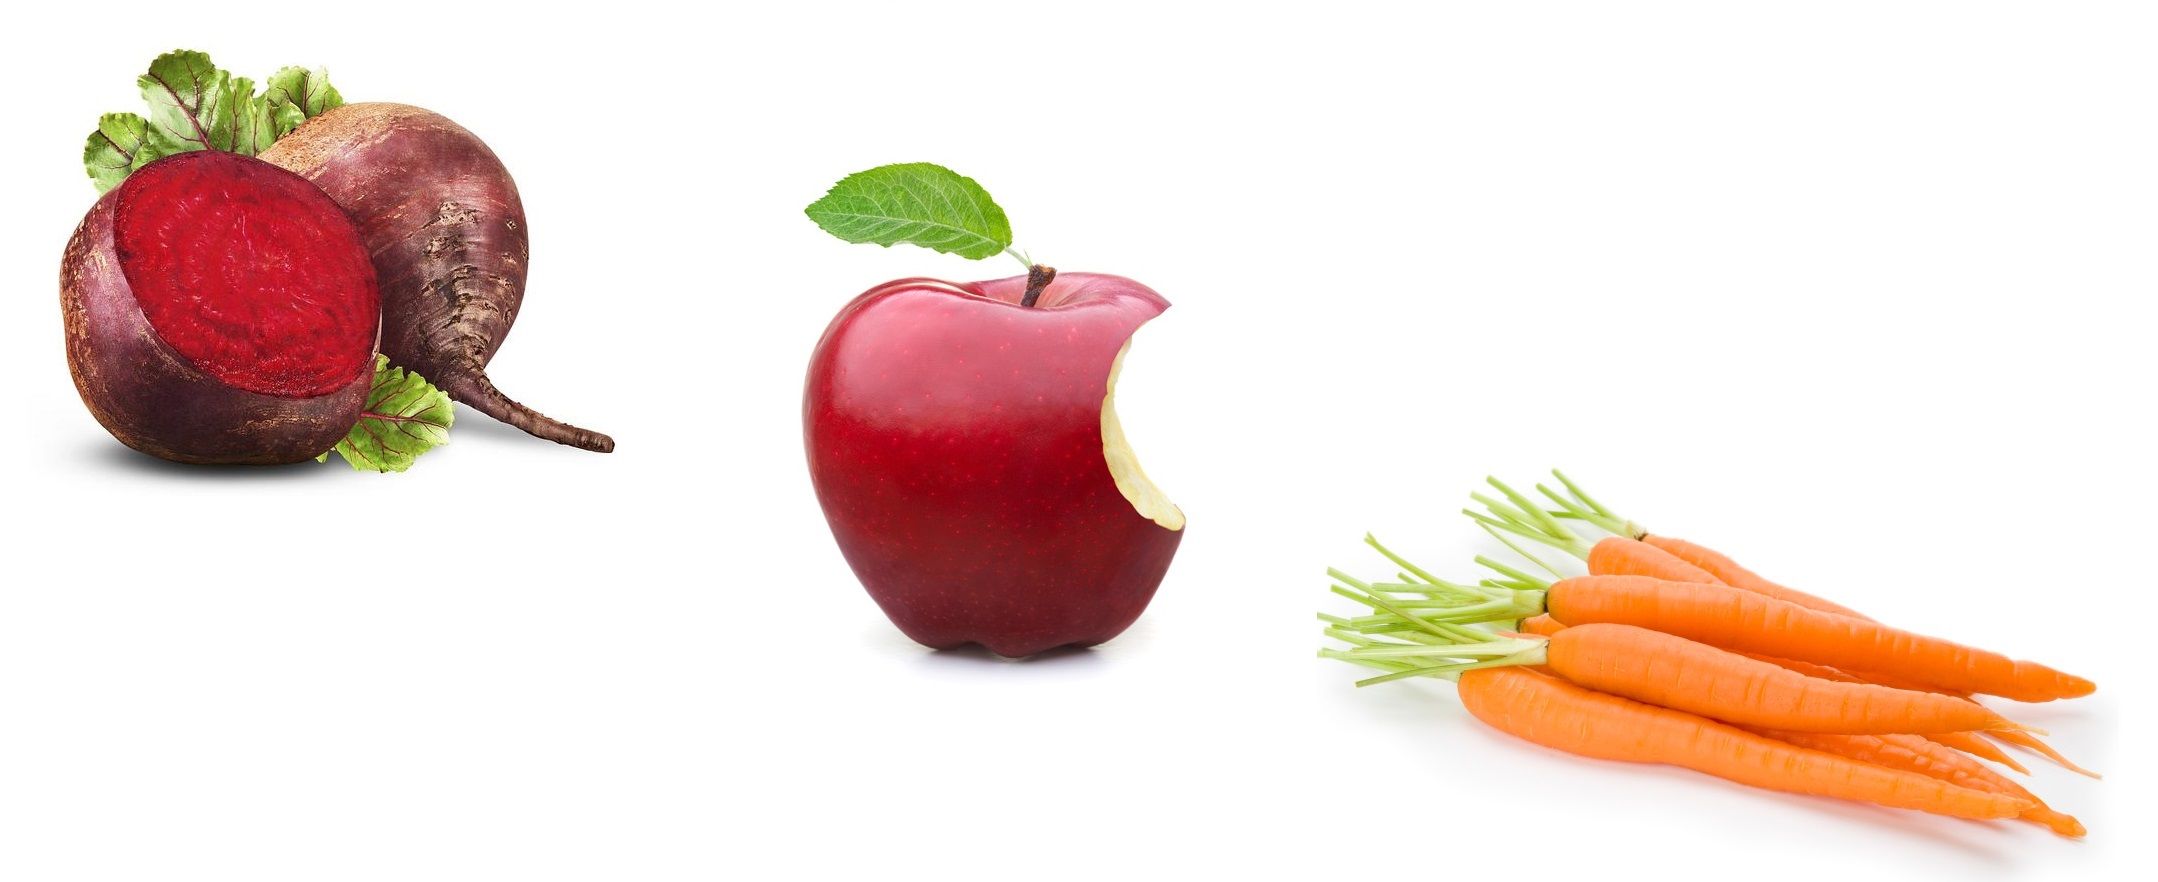 Beetroot-Apple-Carrot2.jpg